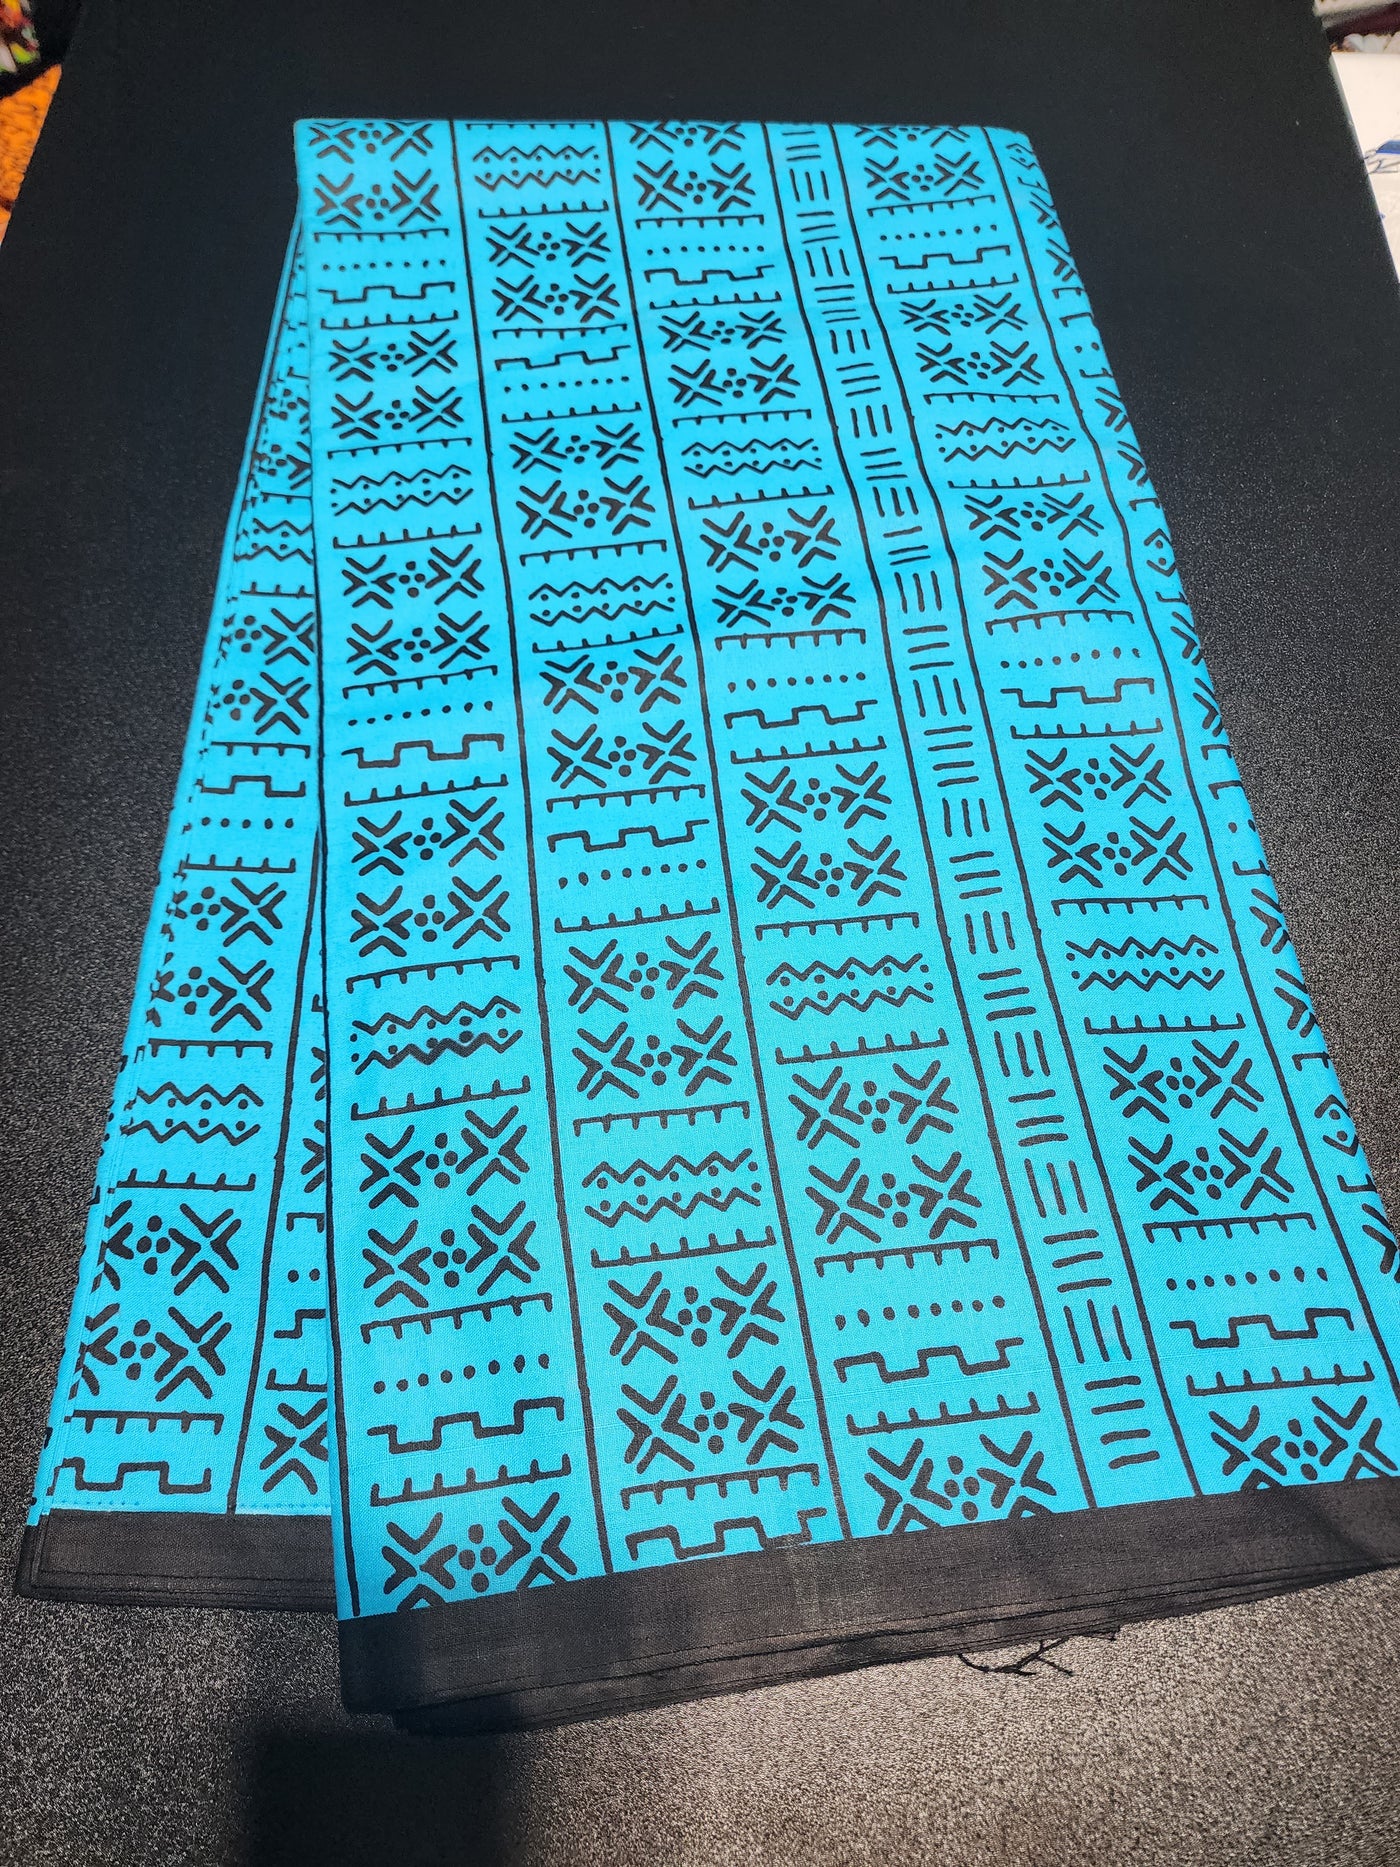 Blue Tribal Ankara Print Fabric ACS2085